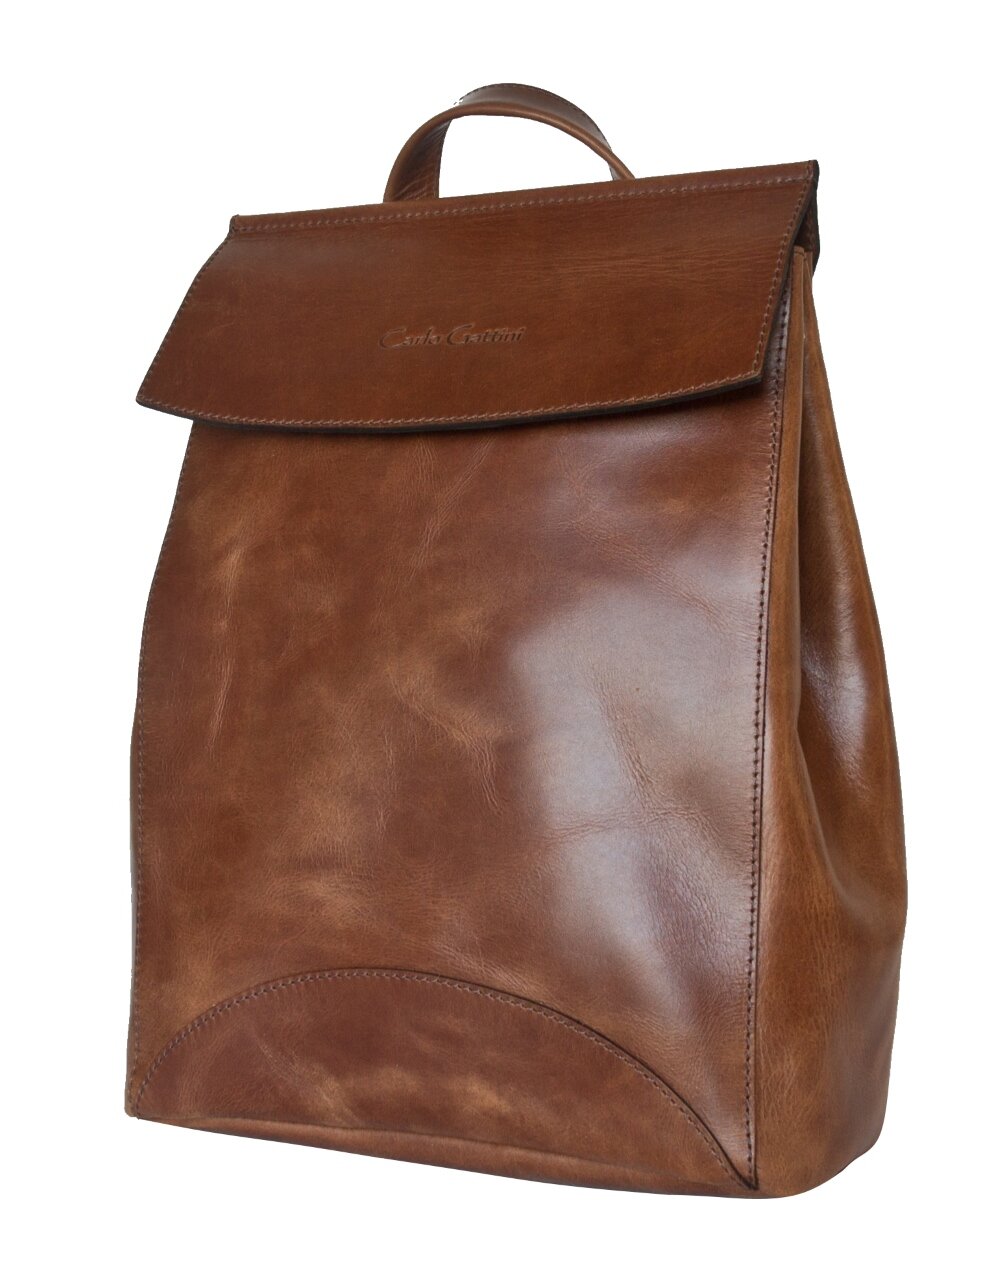 Женская сумка-рюкзак Carlo Gattini Antessio cognac 3041-03